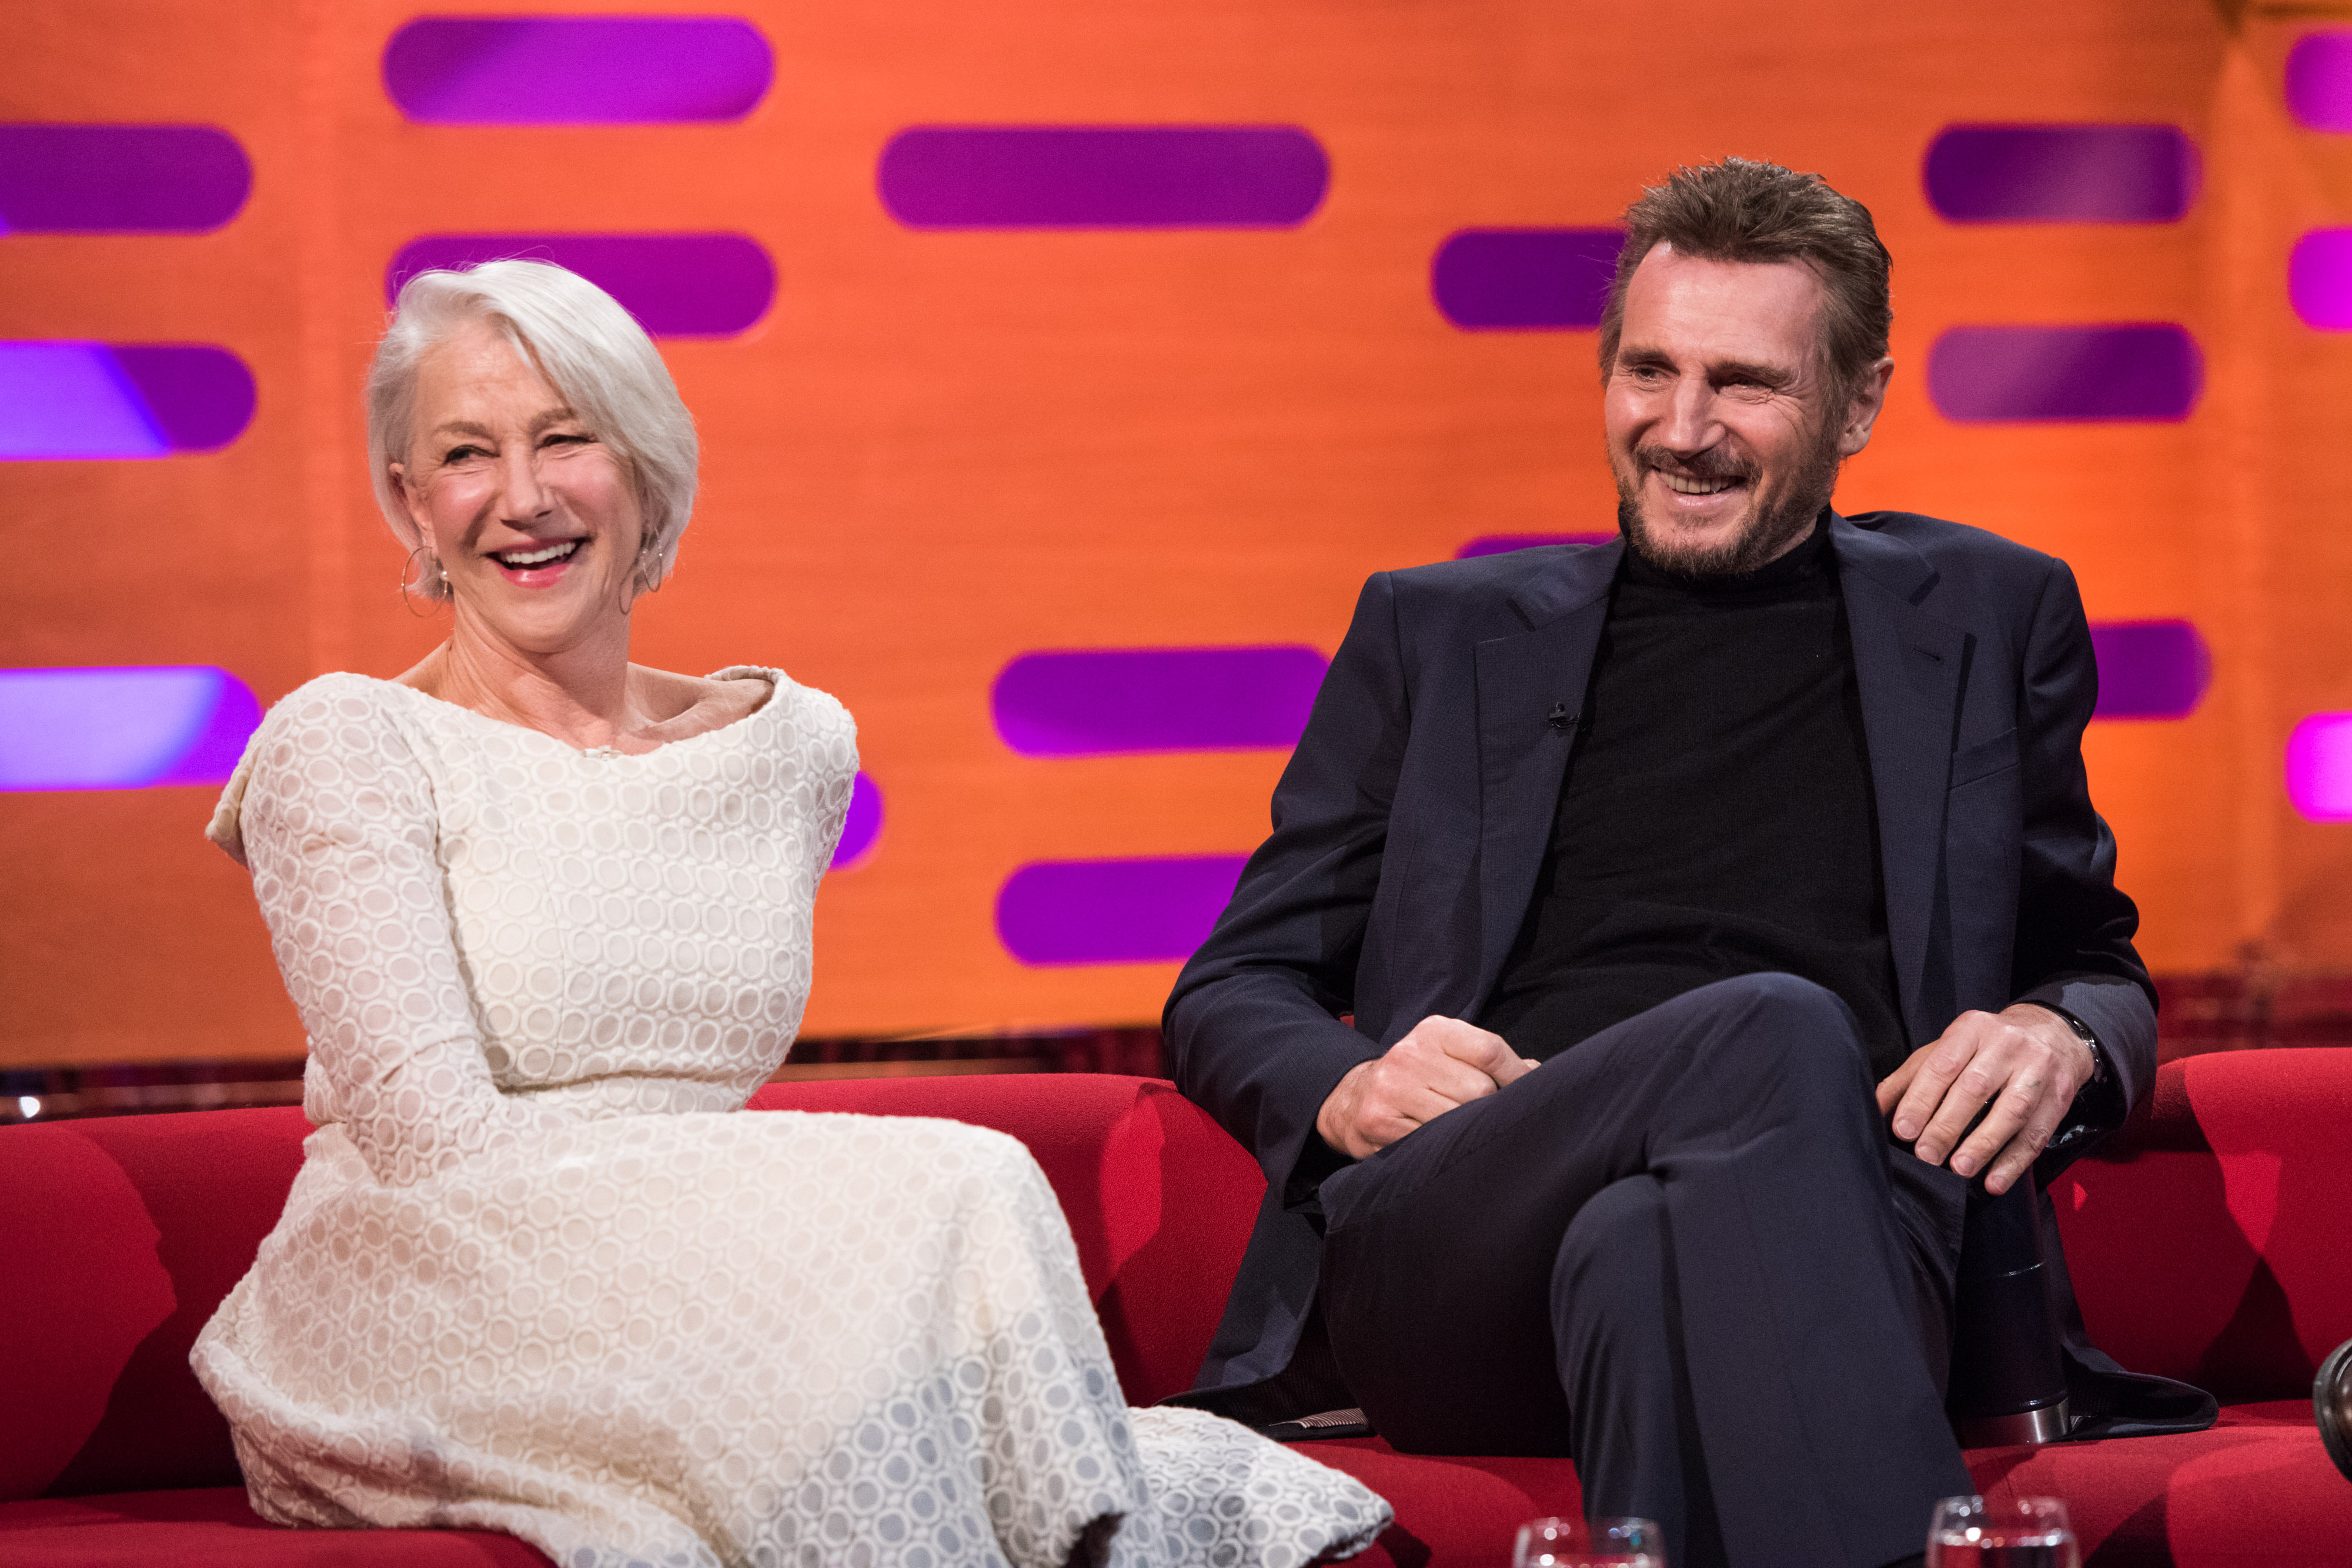 Helen Mirren y Liam Neeson en "The Graham Norton Show" en The London Studios el 18 de enero de 2018 en Londres, Inglaterra | Foto: Getty Images